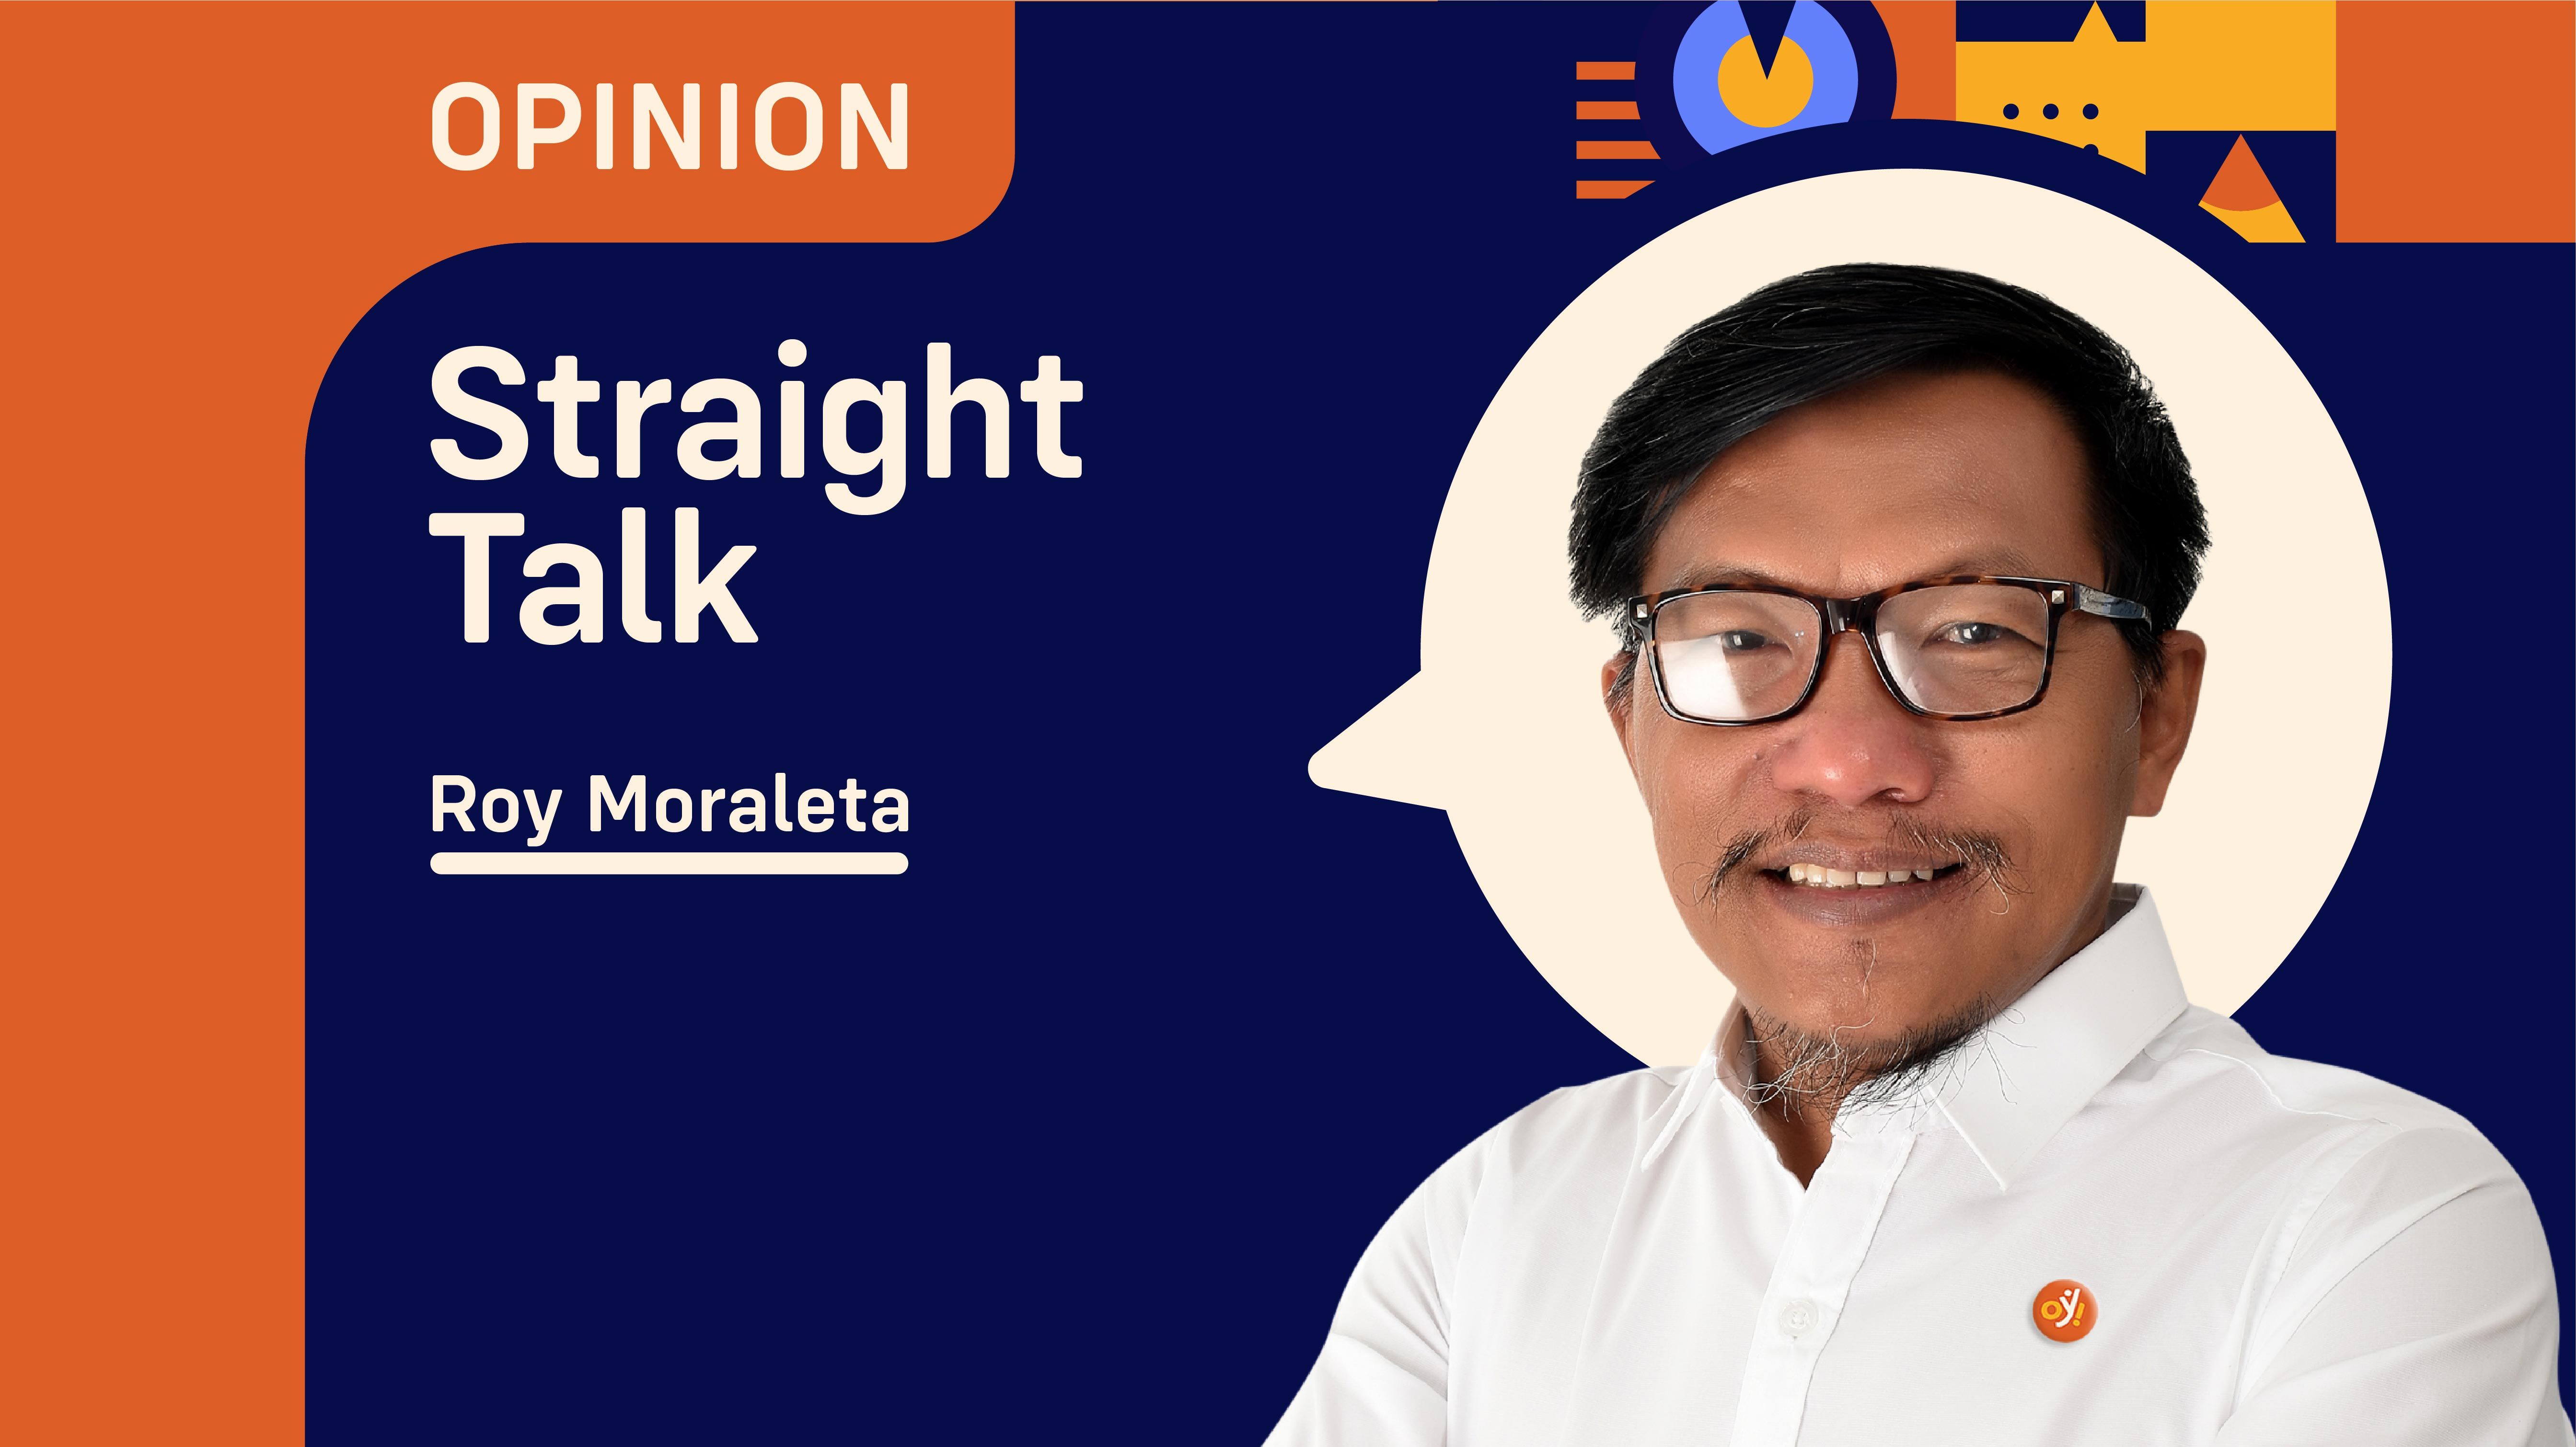 Straight Talk by Roy Moraleta